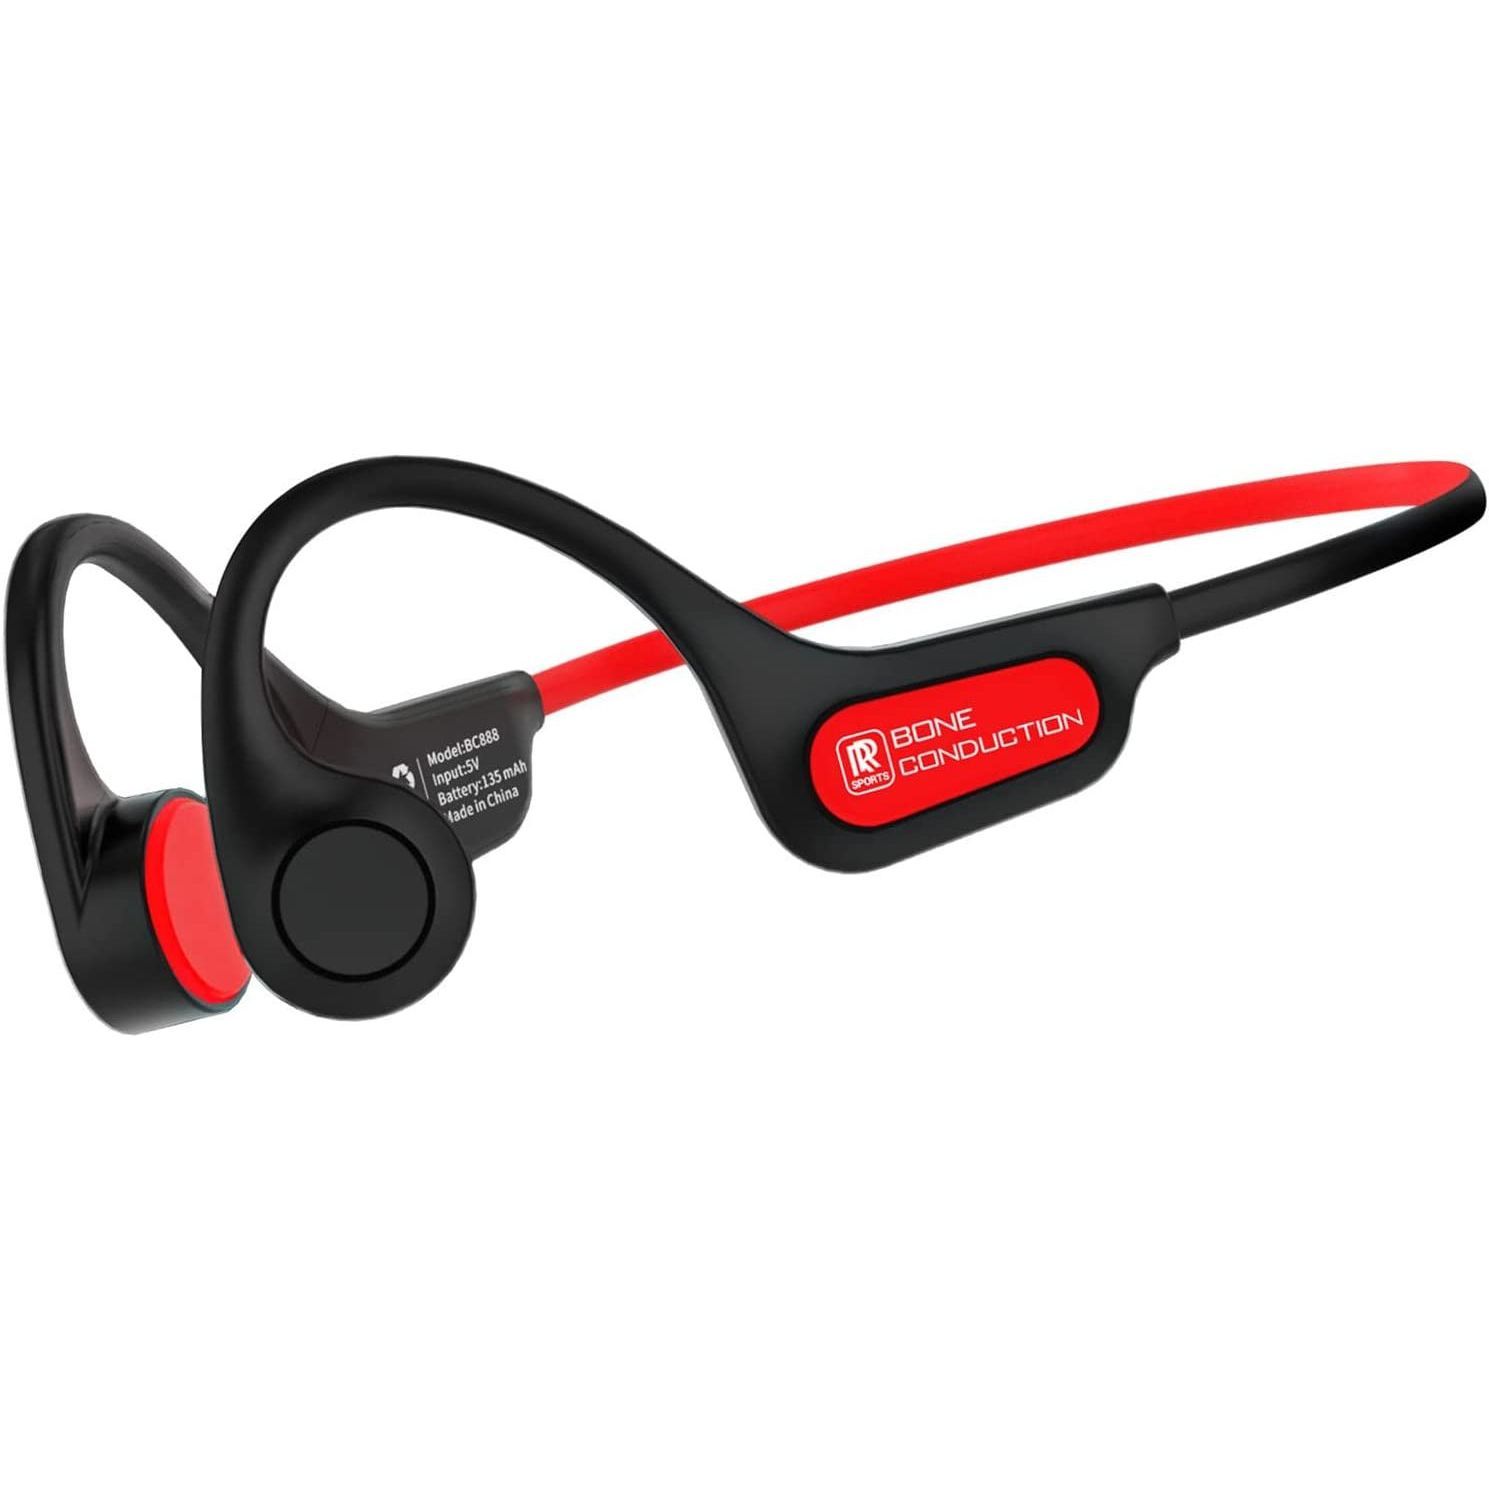 RR Sports waterproof bone conduction headphones for swimming